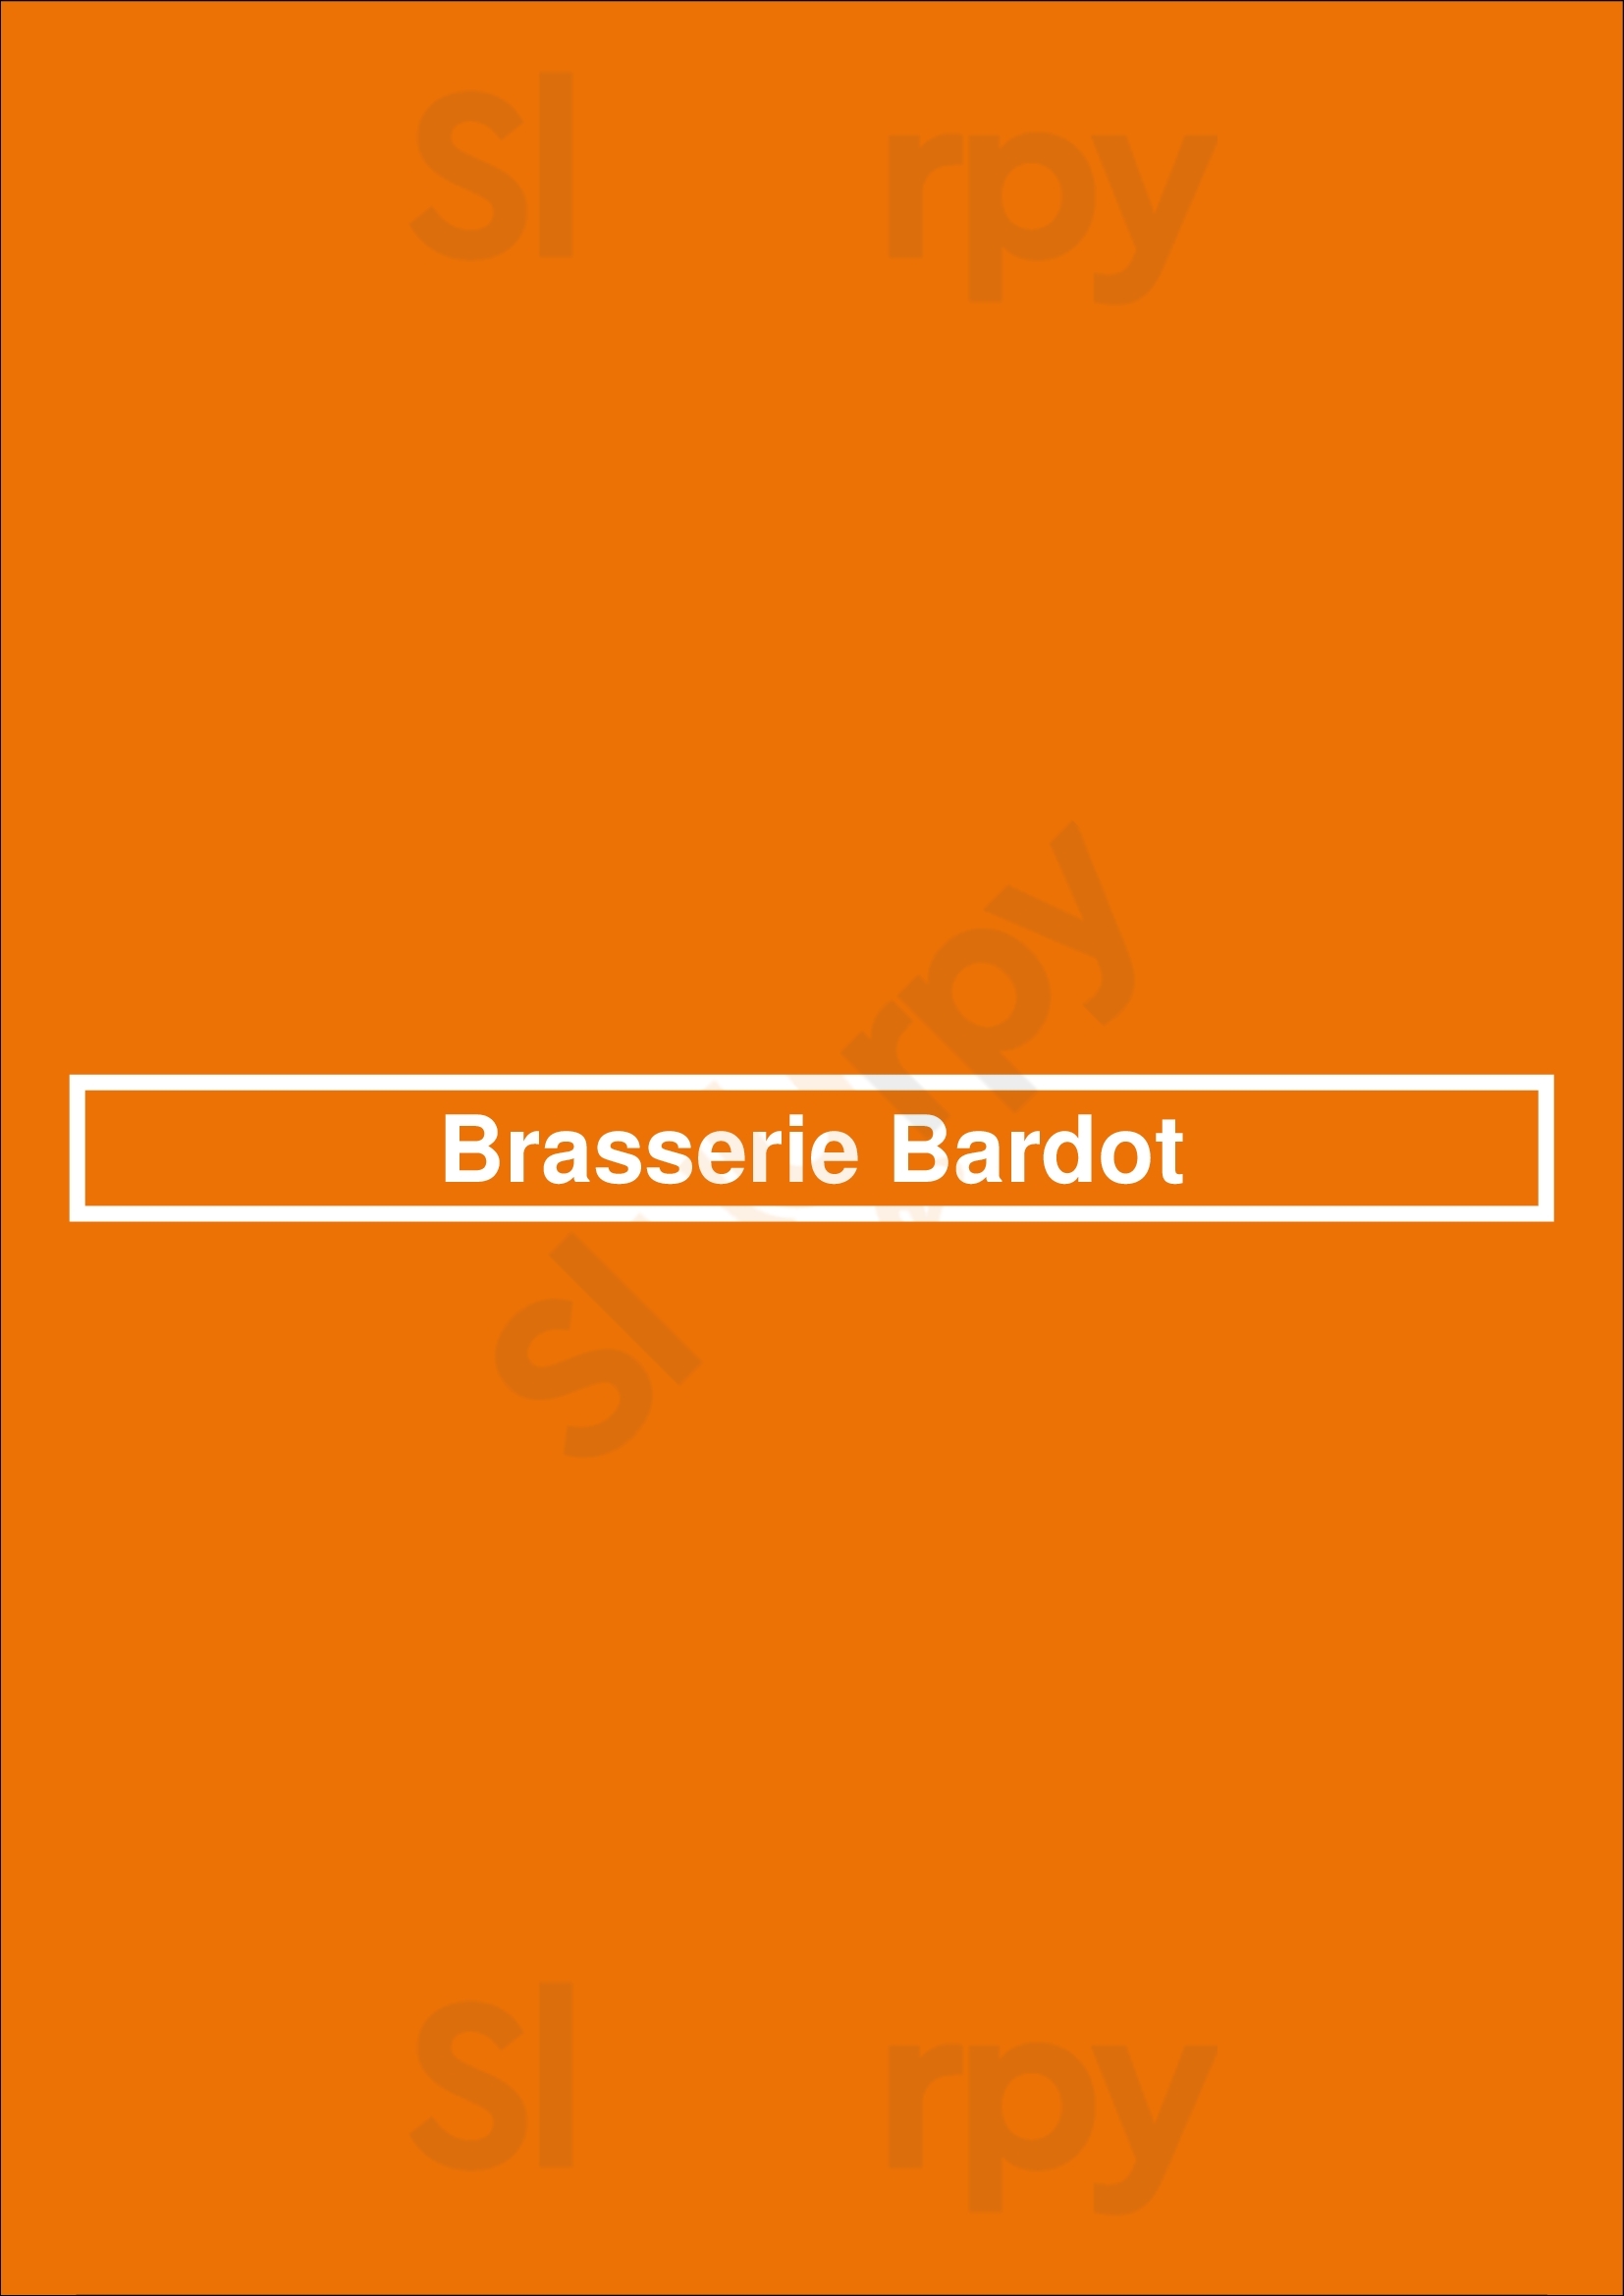 Brasserie Bardot Breda Menu - 1